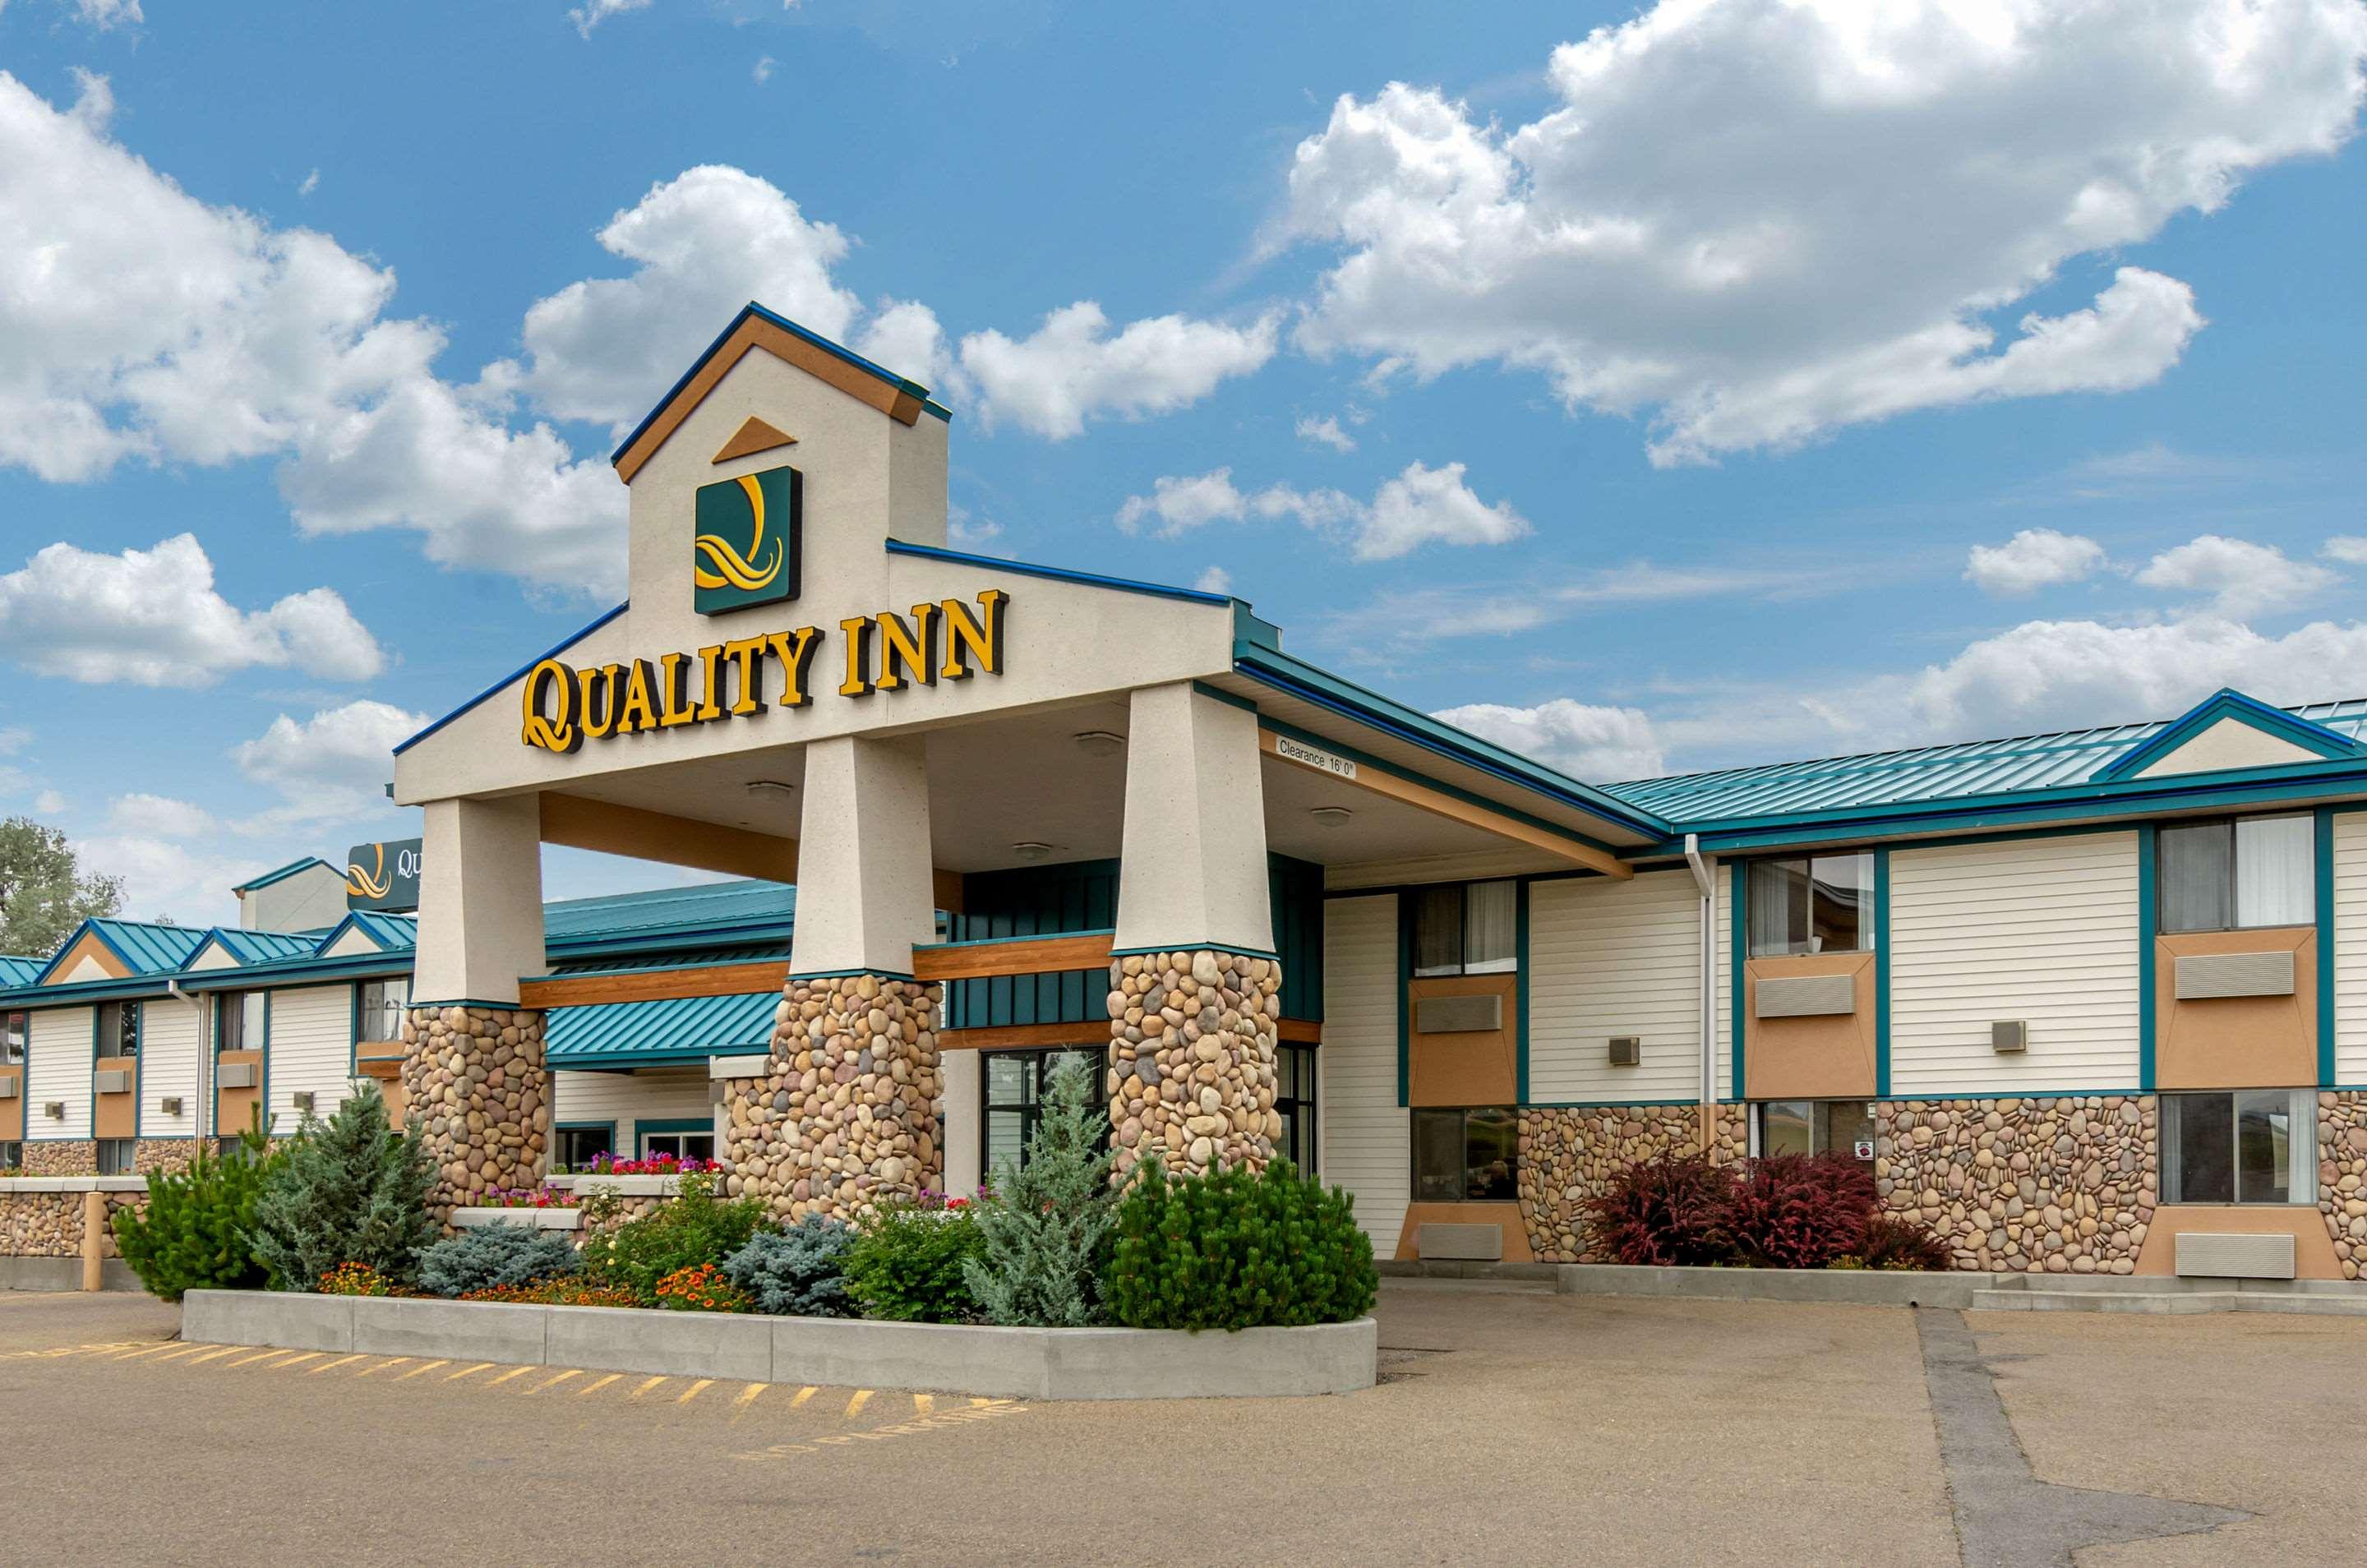 Quality Inn hotel in Dillon, MT